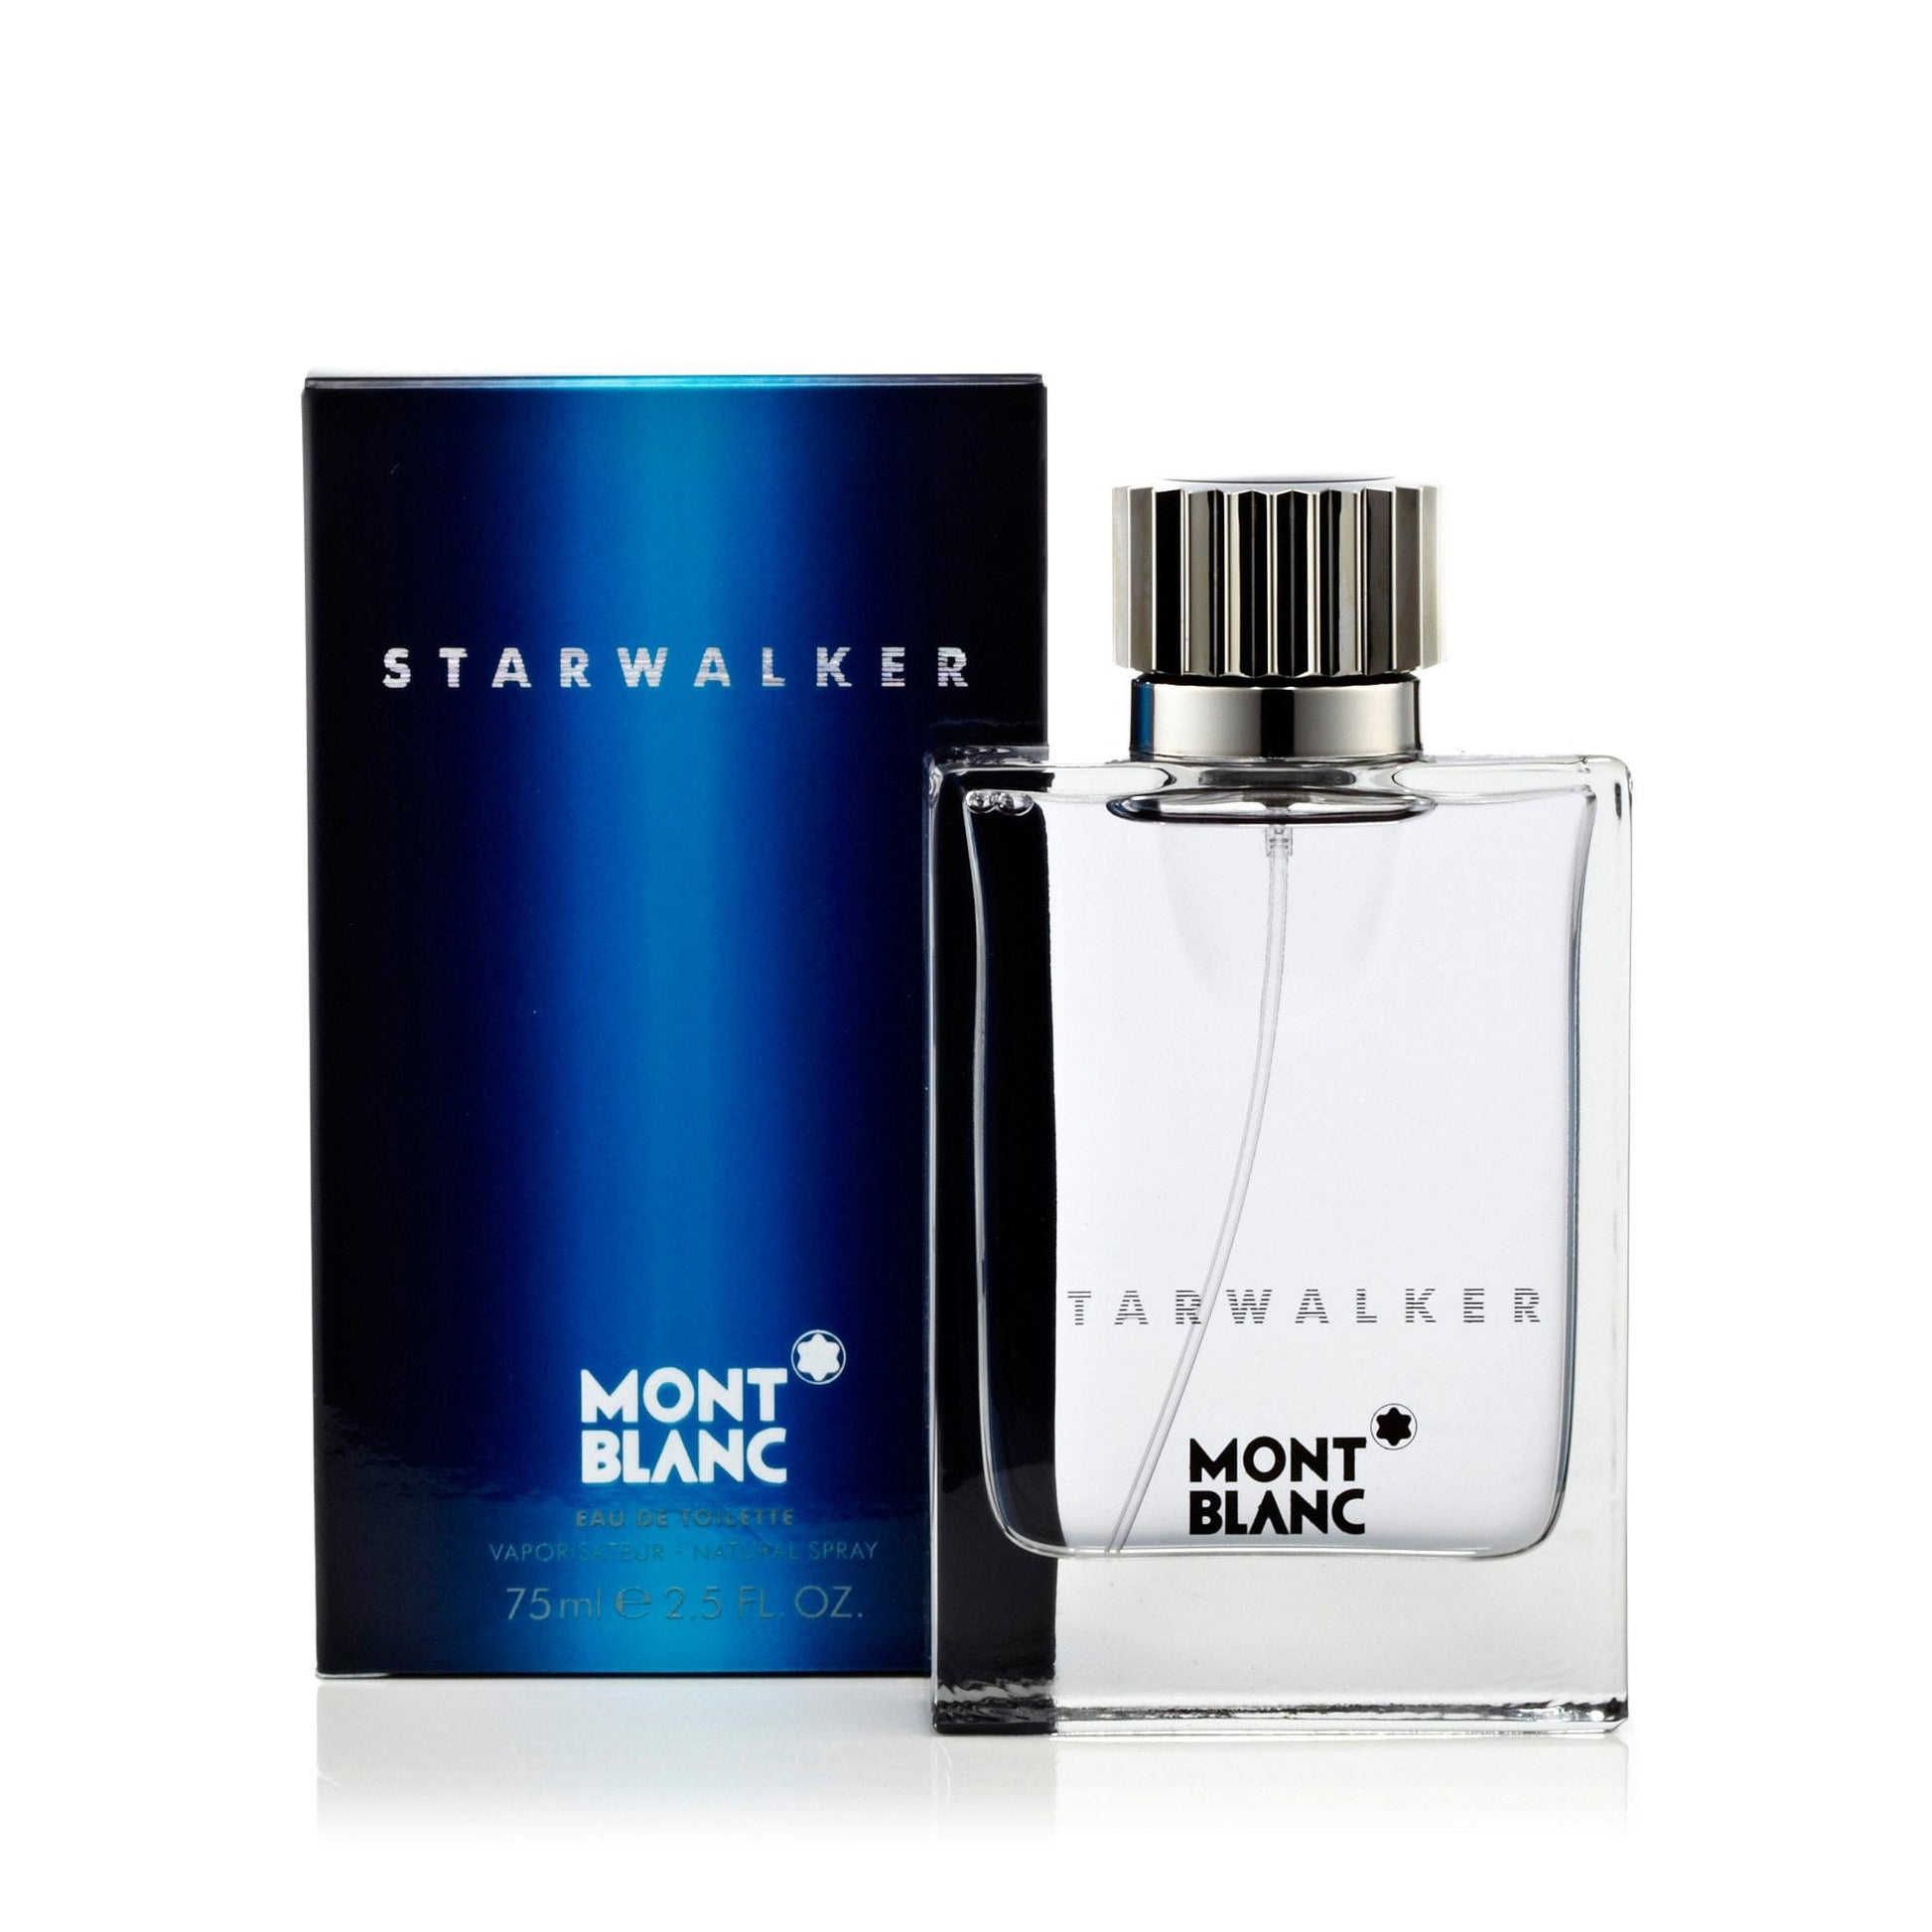 Starwalker Eau de Toilette Spray for Men by Montblanc, Product image 2